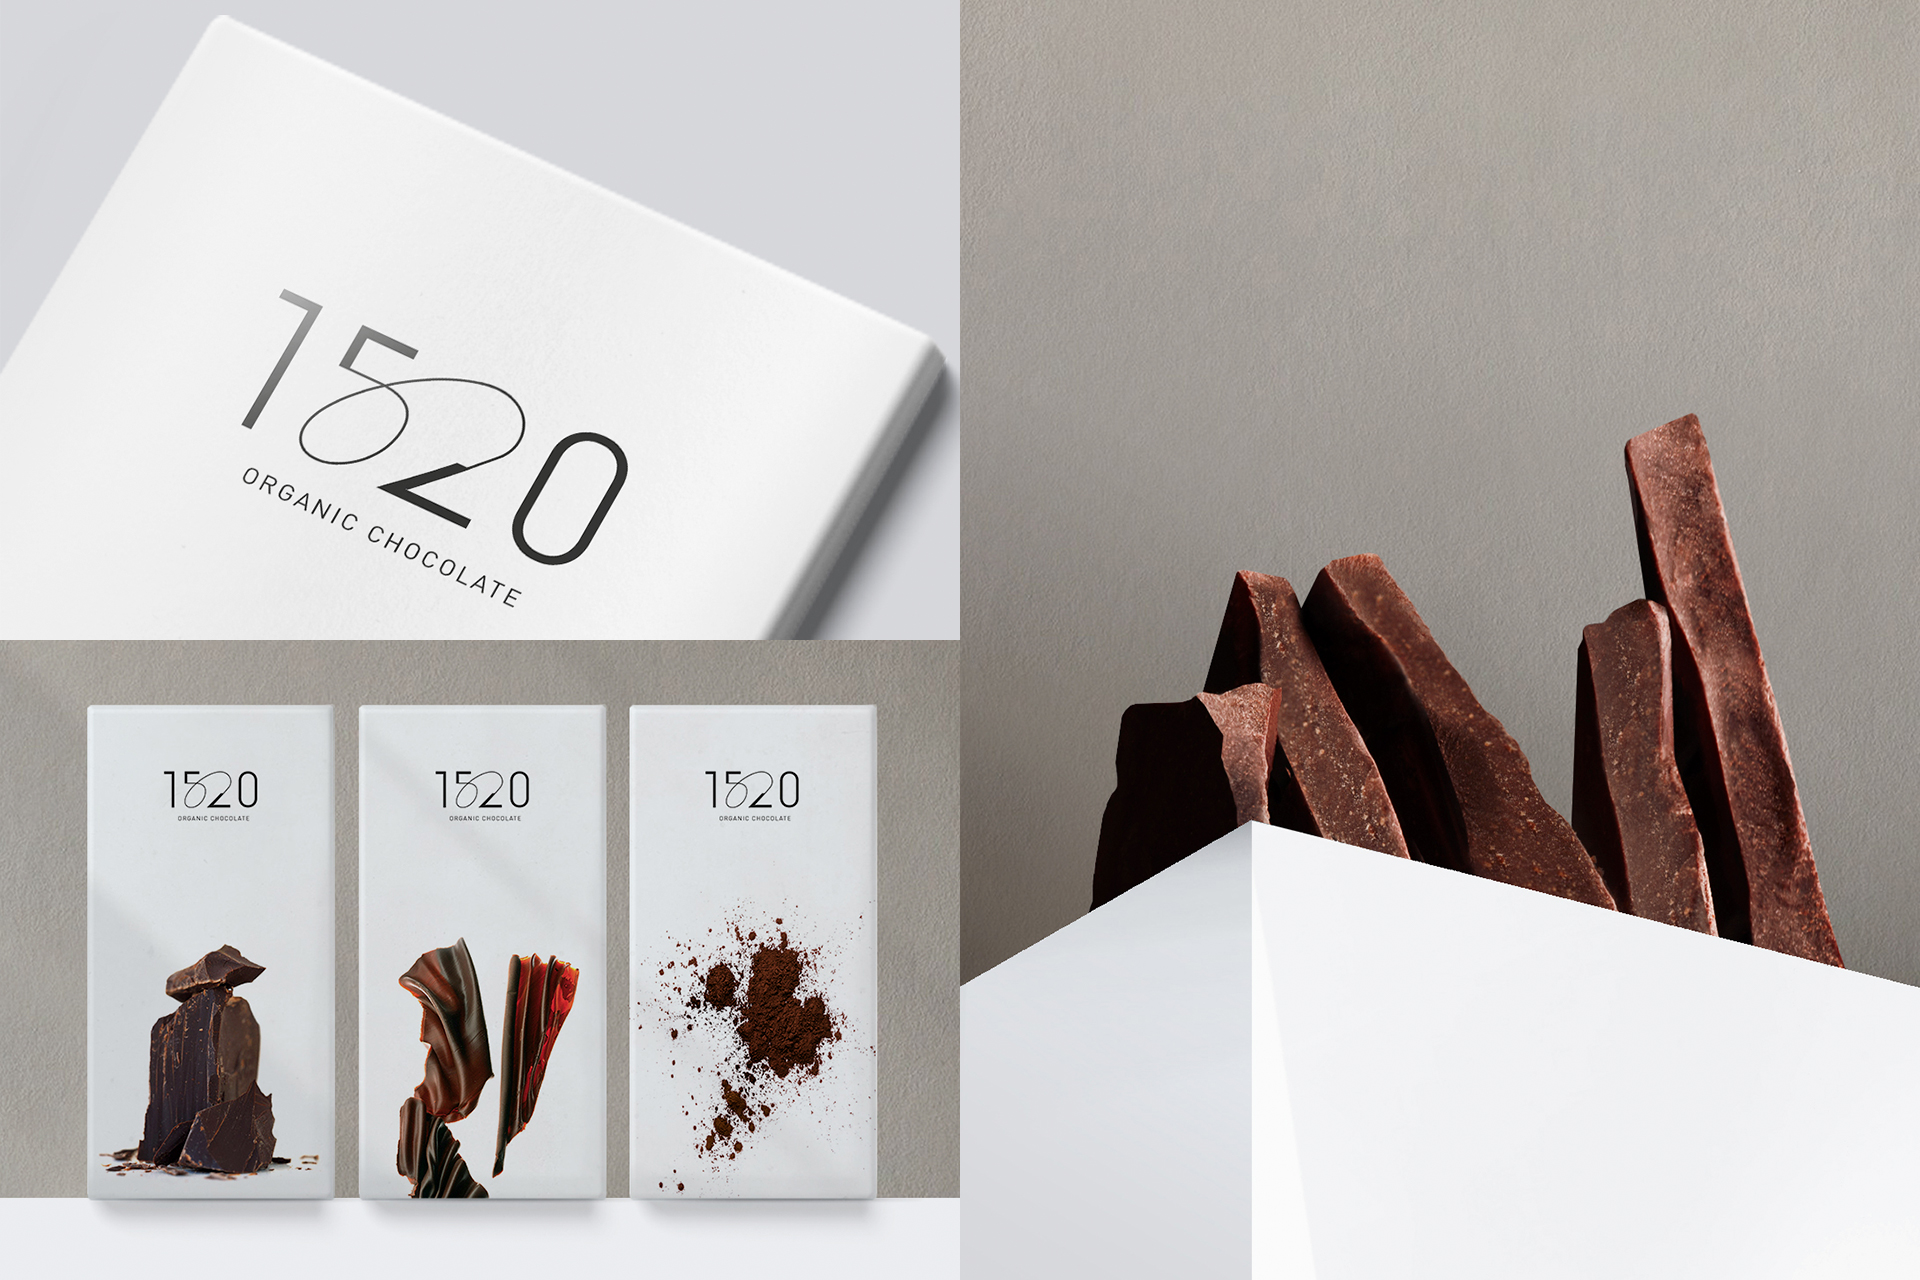 1520 Organic Chocolate, Branding & Packaging by Silenceworks - Creative Work